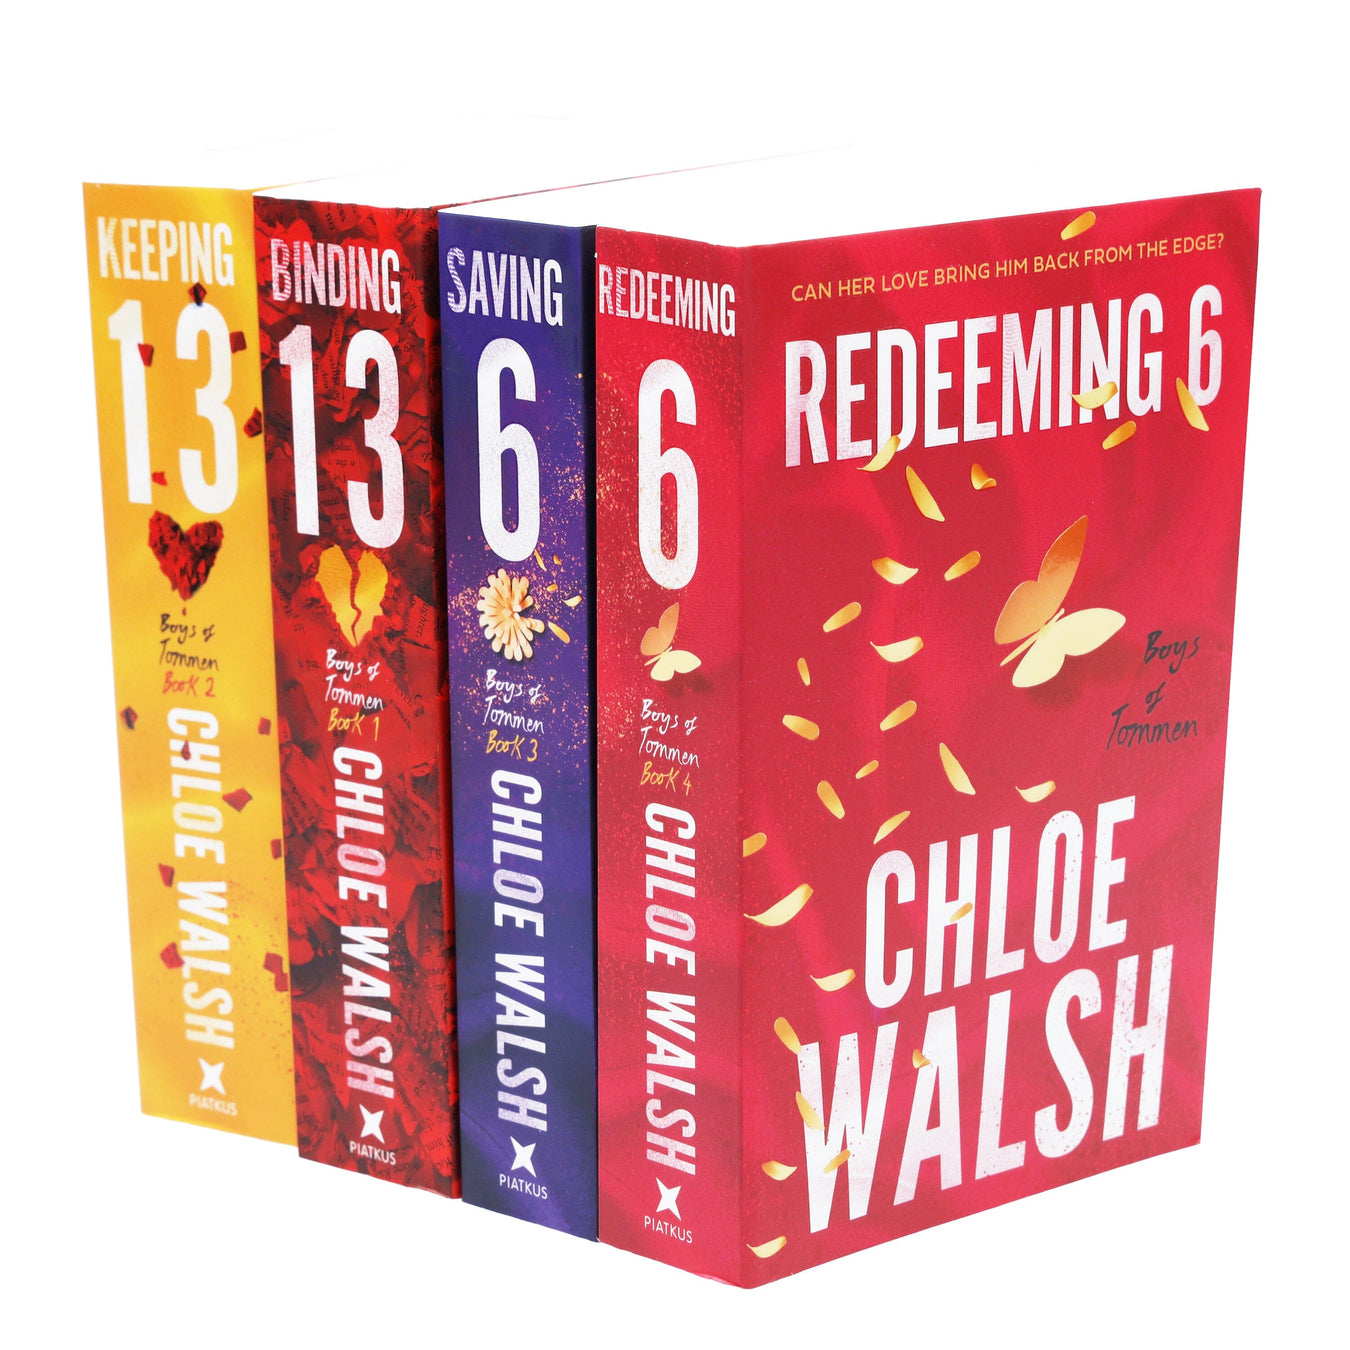 Chloe Walsh Books